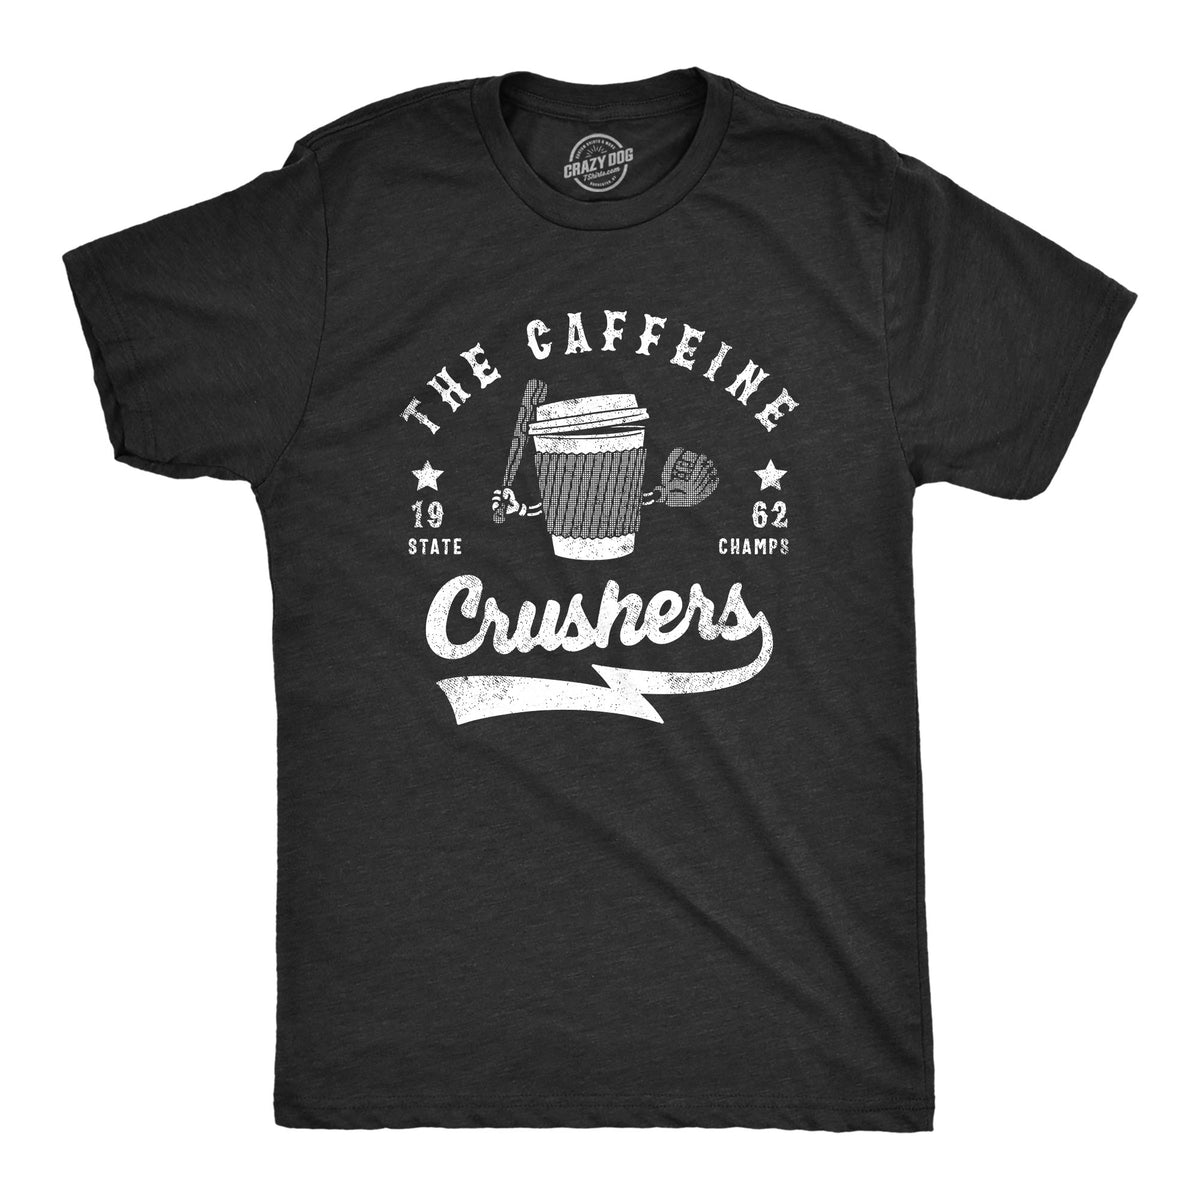 Funny Heather Black - CRUSHERS The Caffeine Crushers Mens T Shirt Nerdy Coffee Baseball Tee